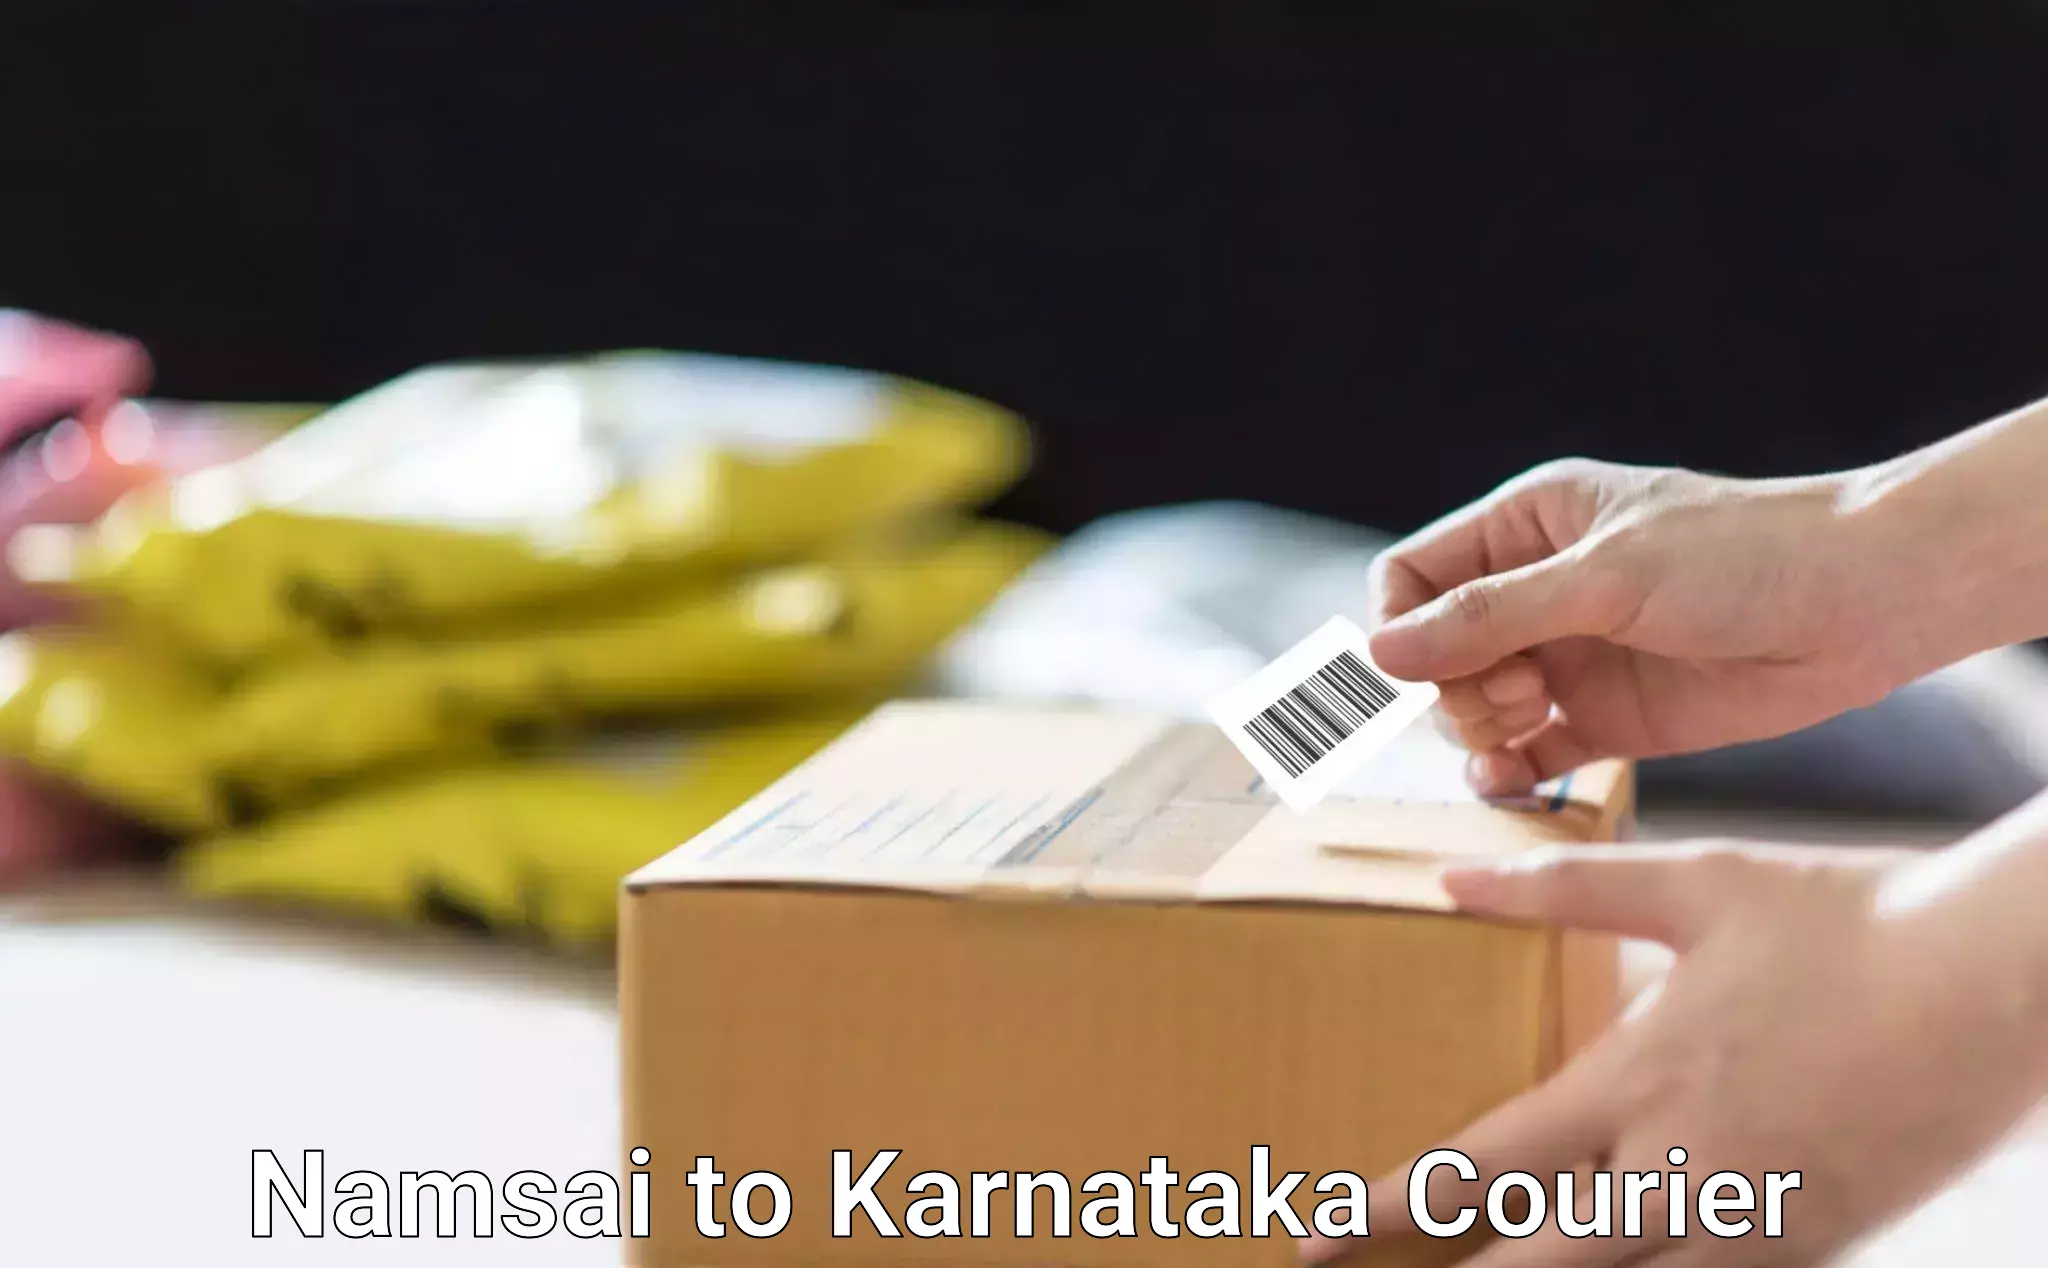 Global logistics network Namsai to Karnataka